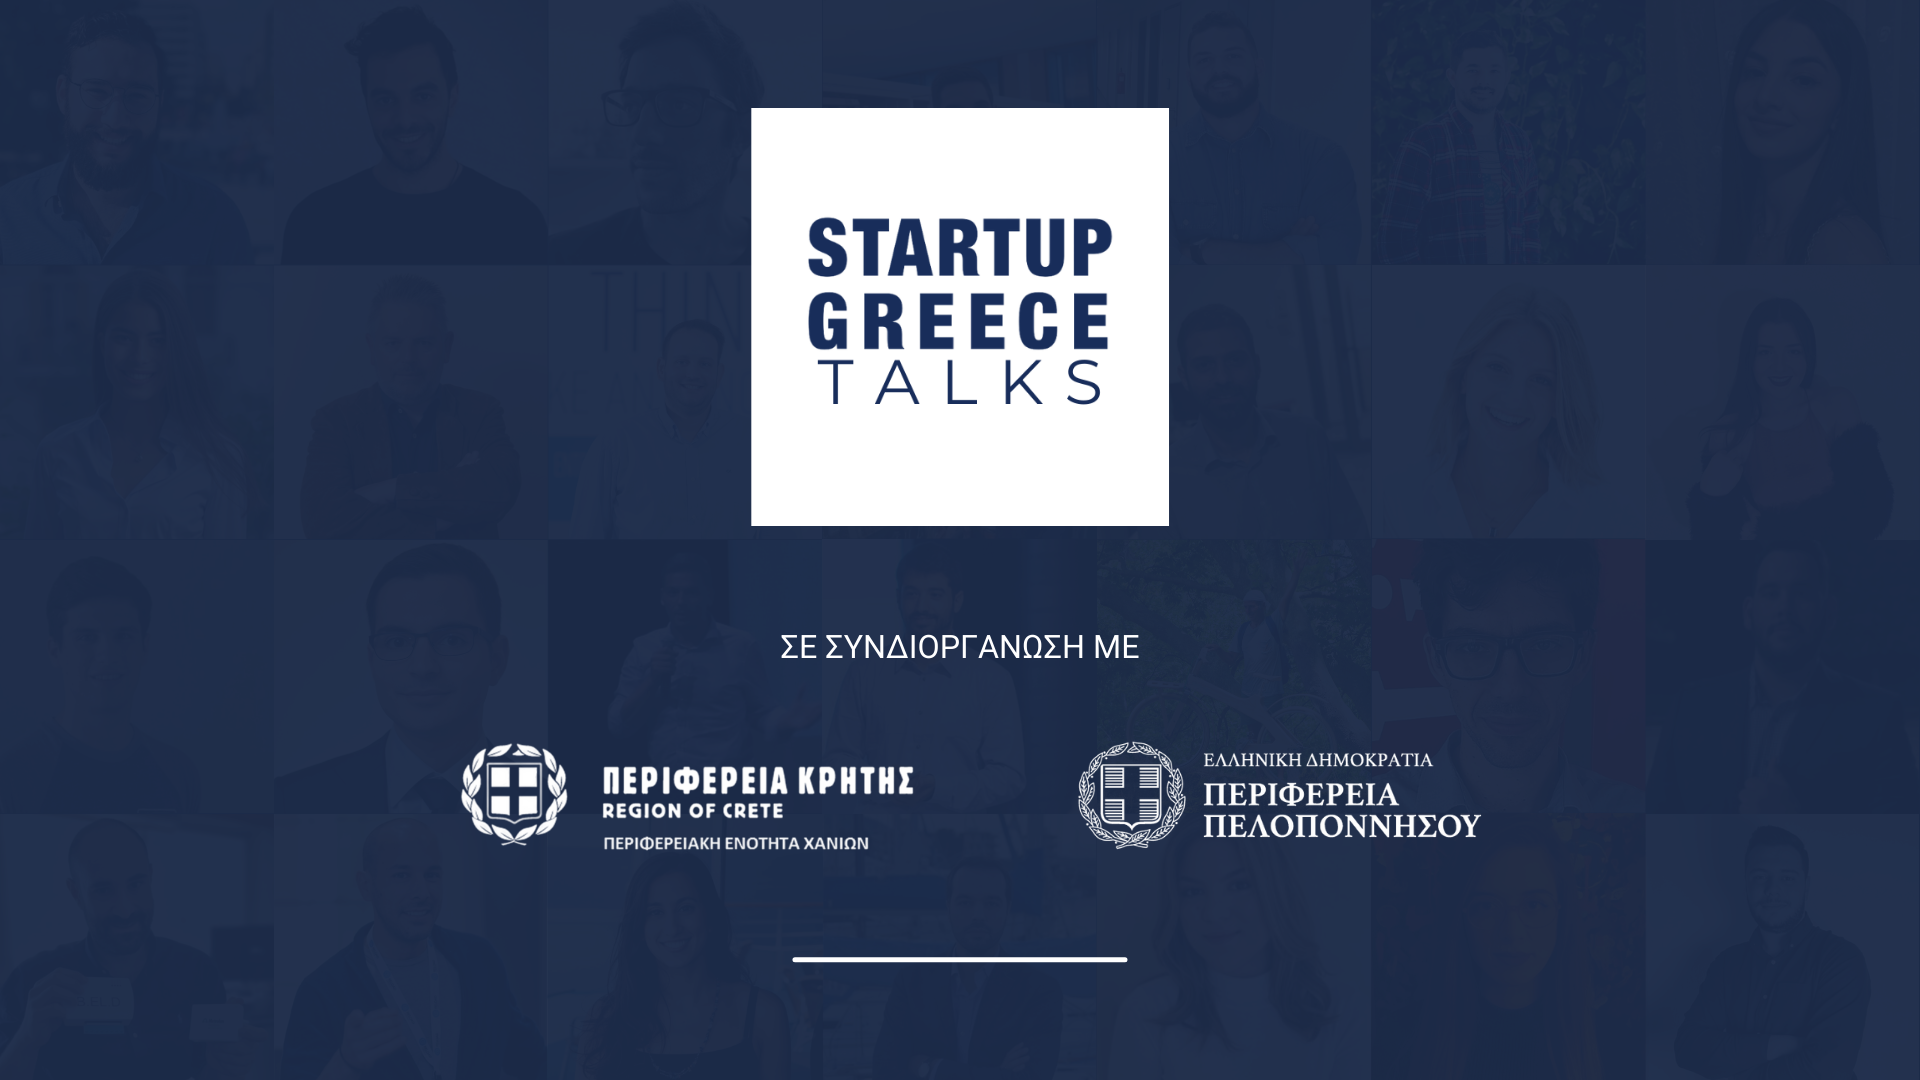 Startup Greece Talks 2021: Μια σειρά επεισοδίων αφιερωμένη στην καινοτομία και τα startups